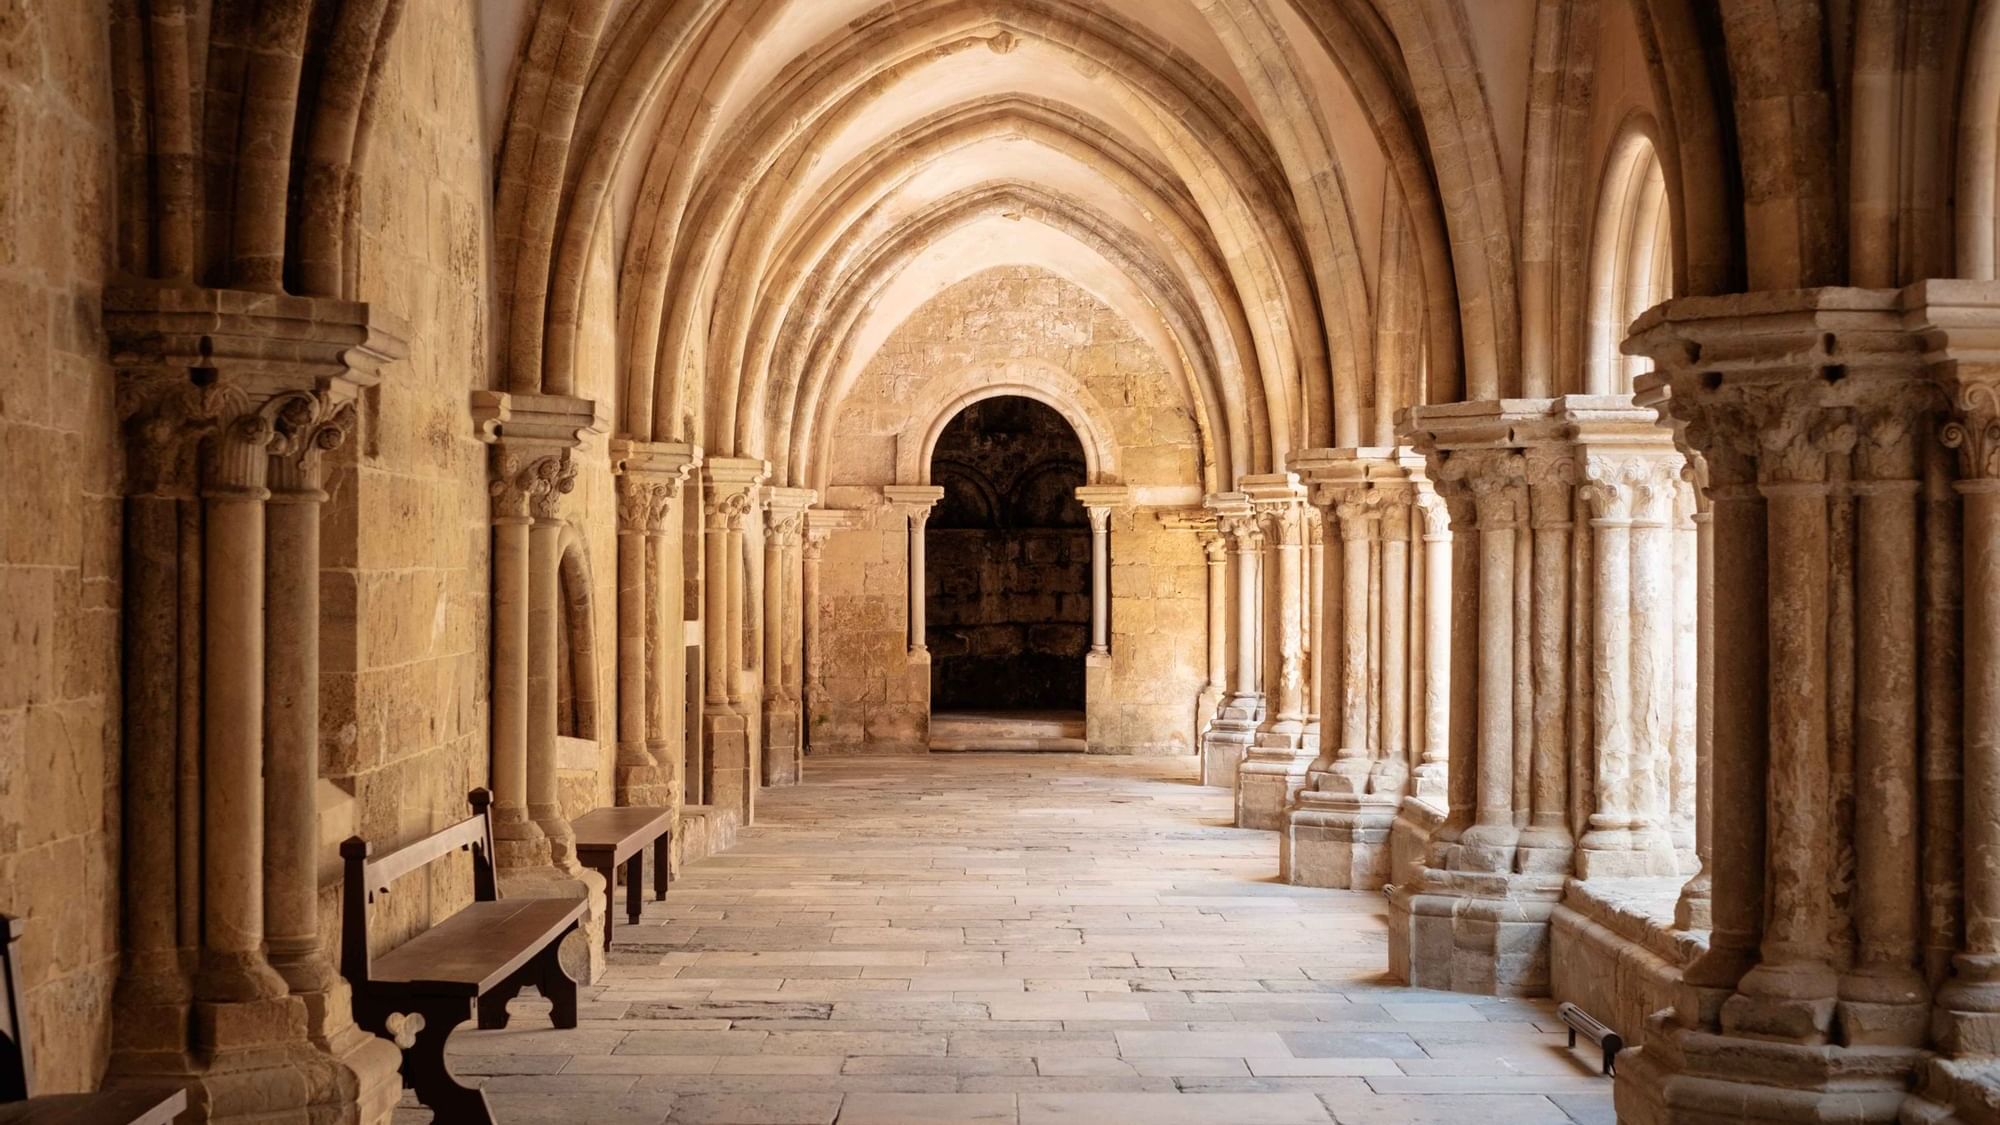 View of a Corridor in Porto Cathedral near Originals Hotels